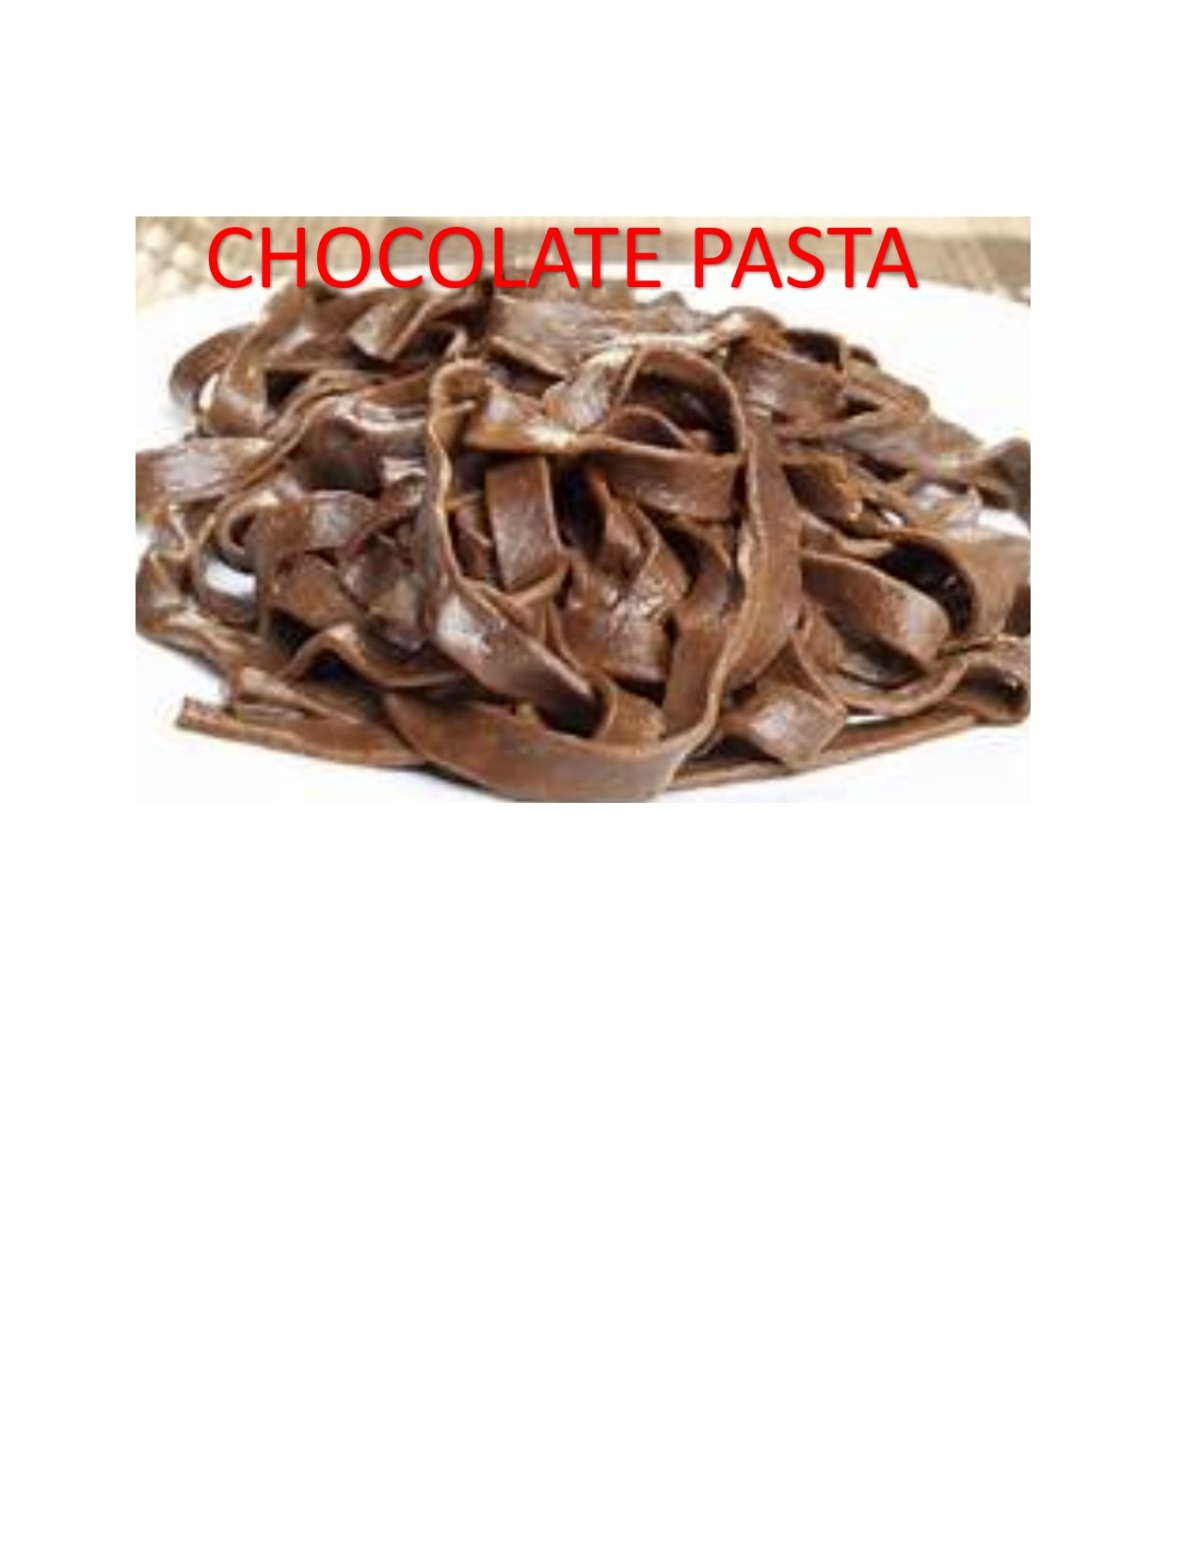 Home Made Chocolate Pasta image